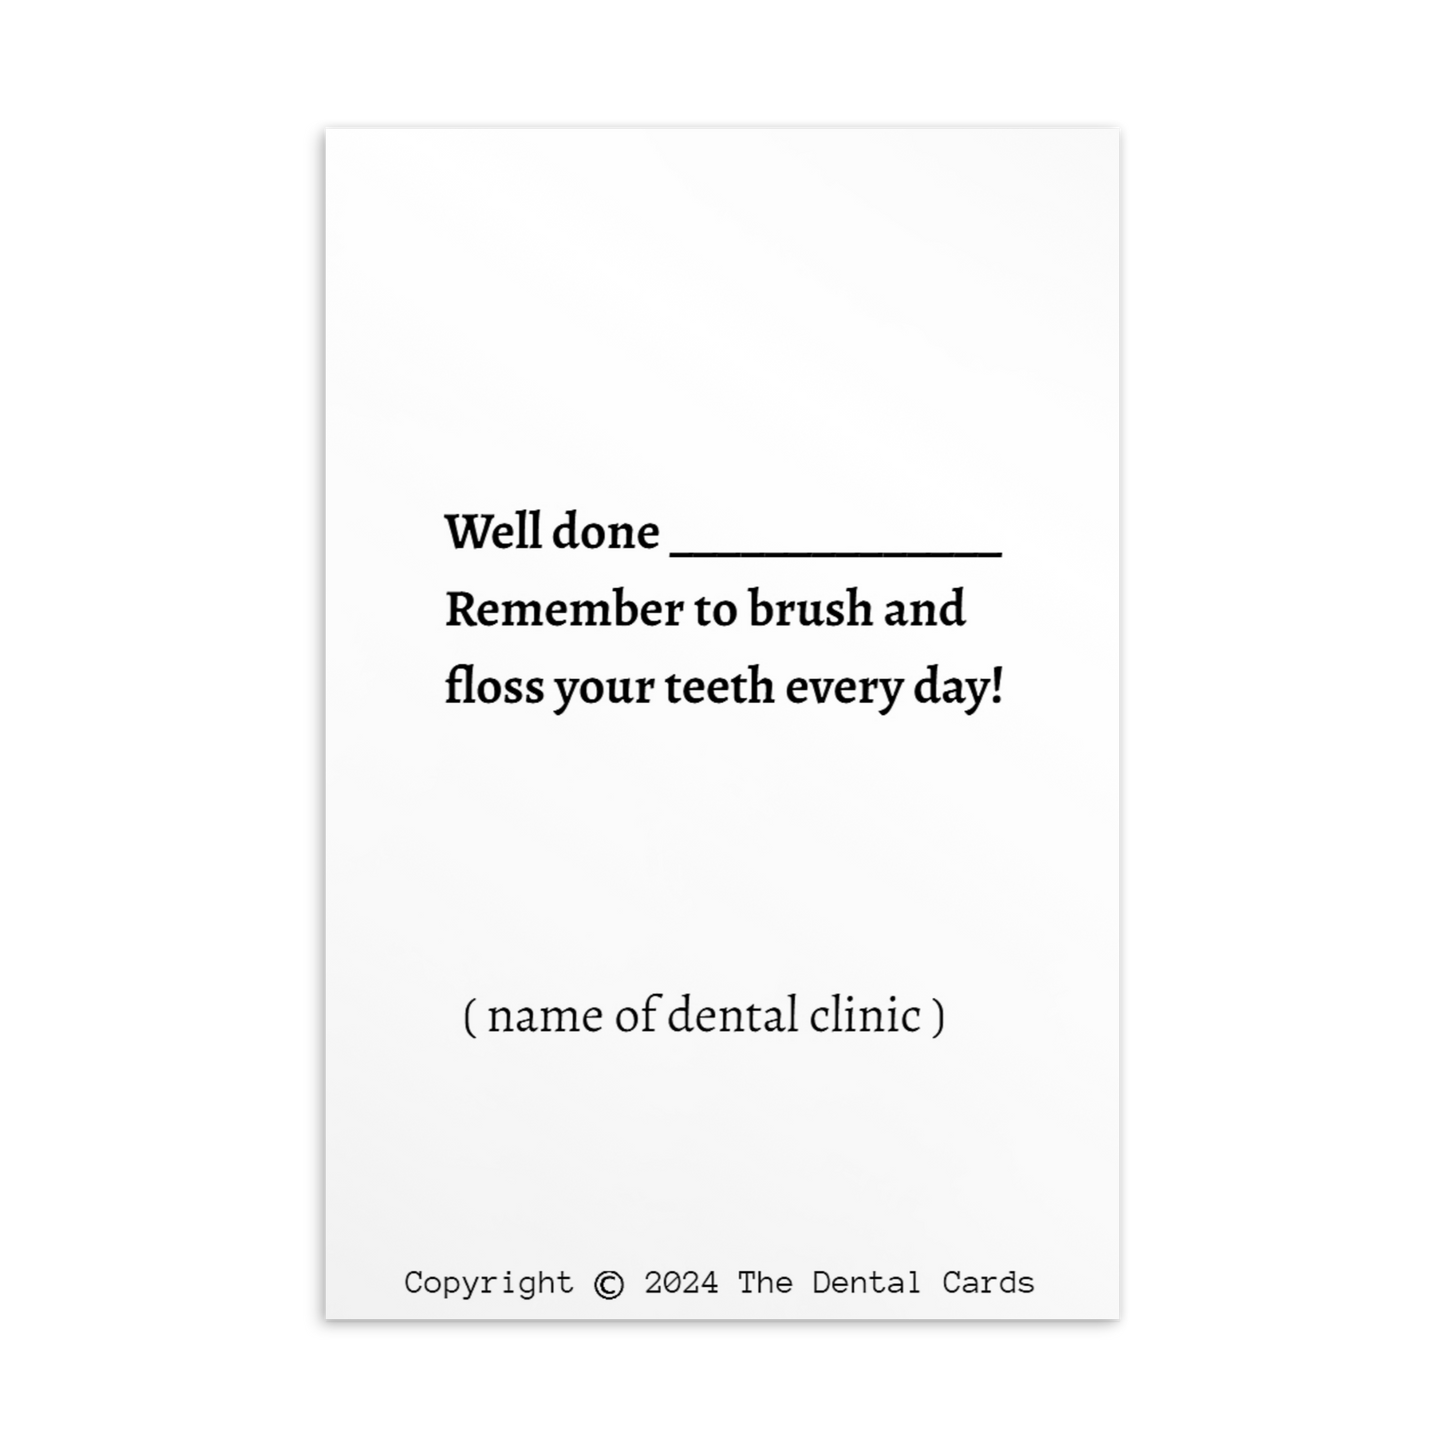 Dental Motivational & Reward Cards- I Have Happy Teeth!